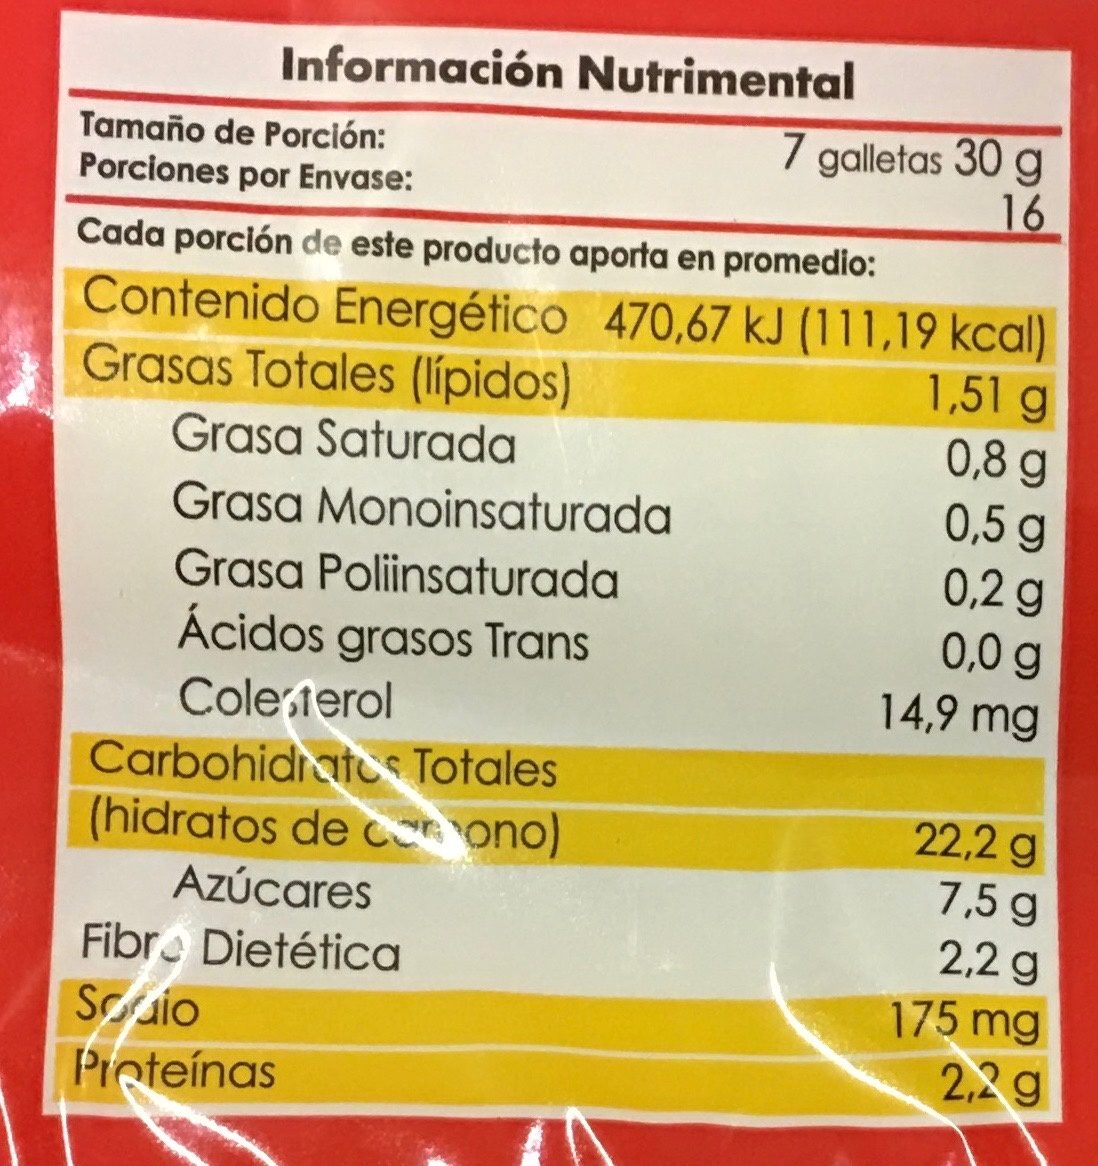 Galletas marías - Información nutricional